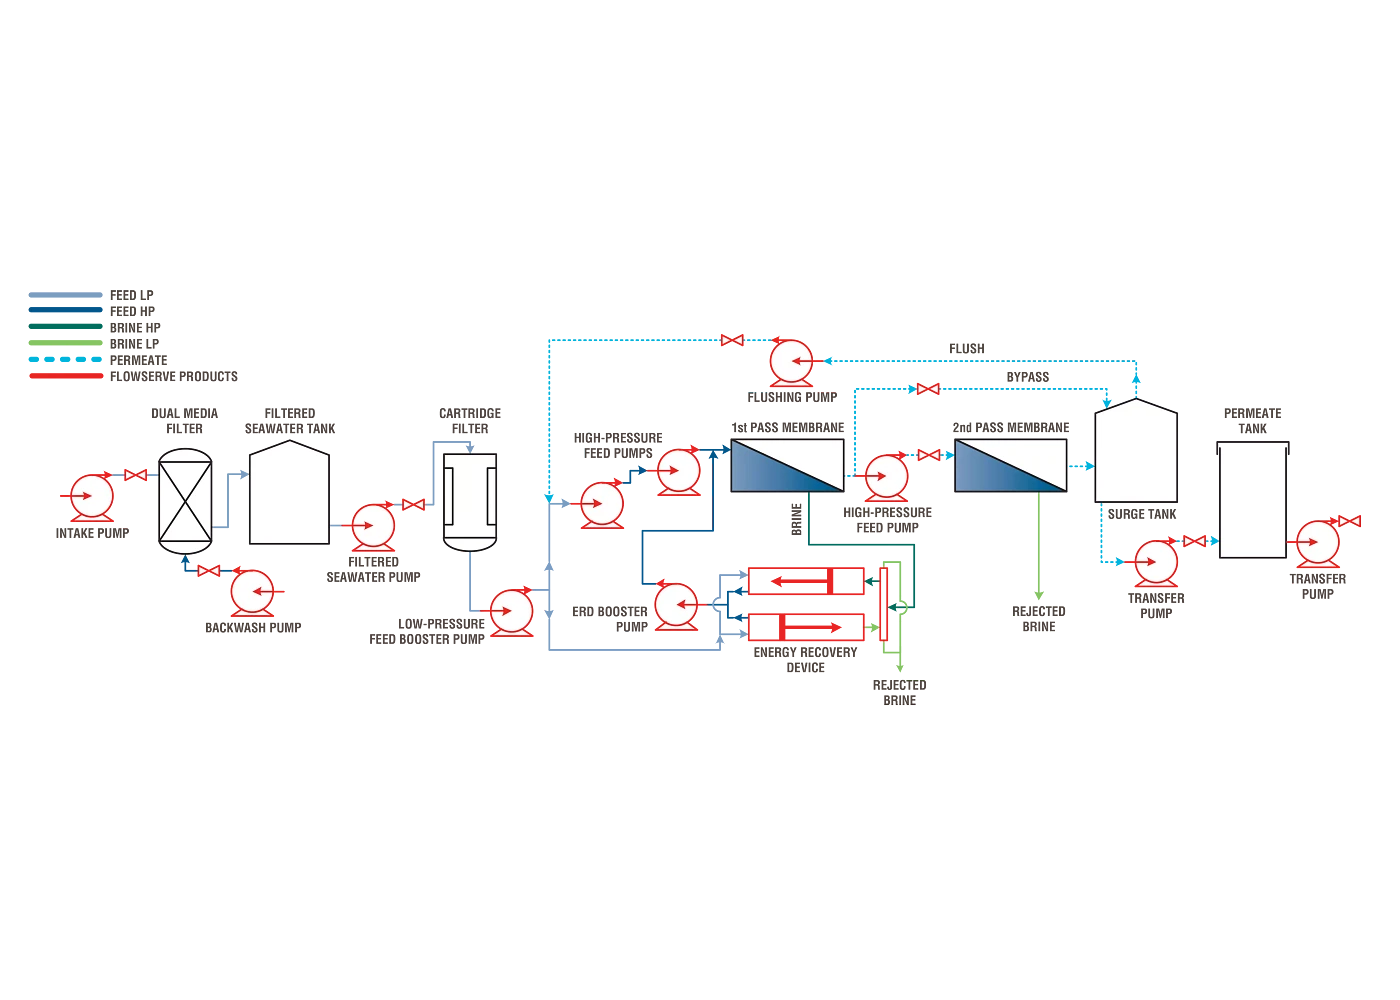 Flow control diagram for SWRO desalination plants.